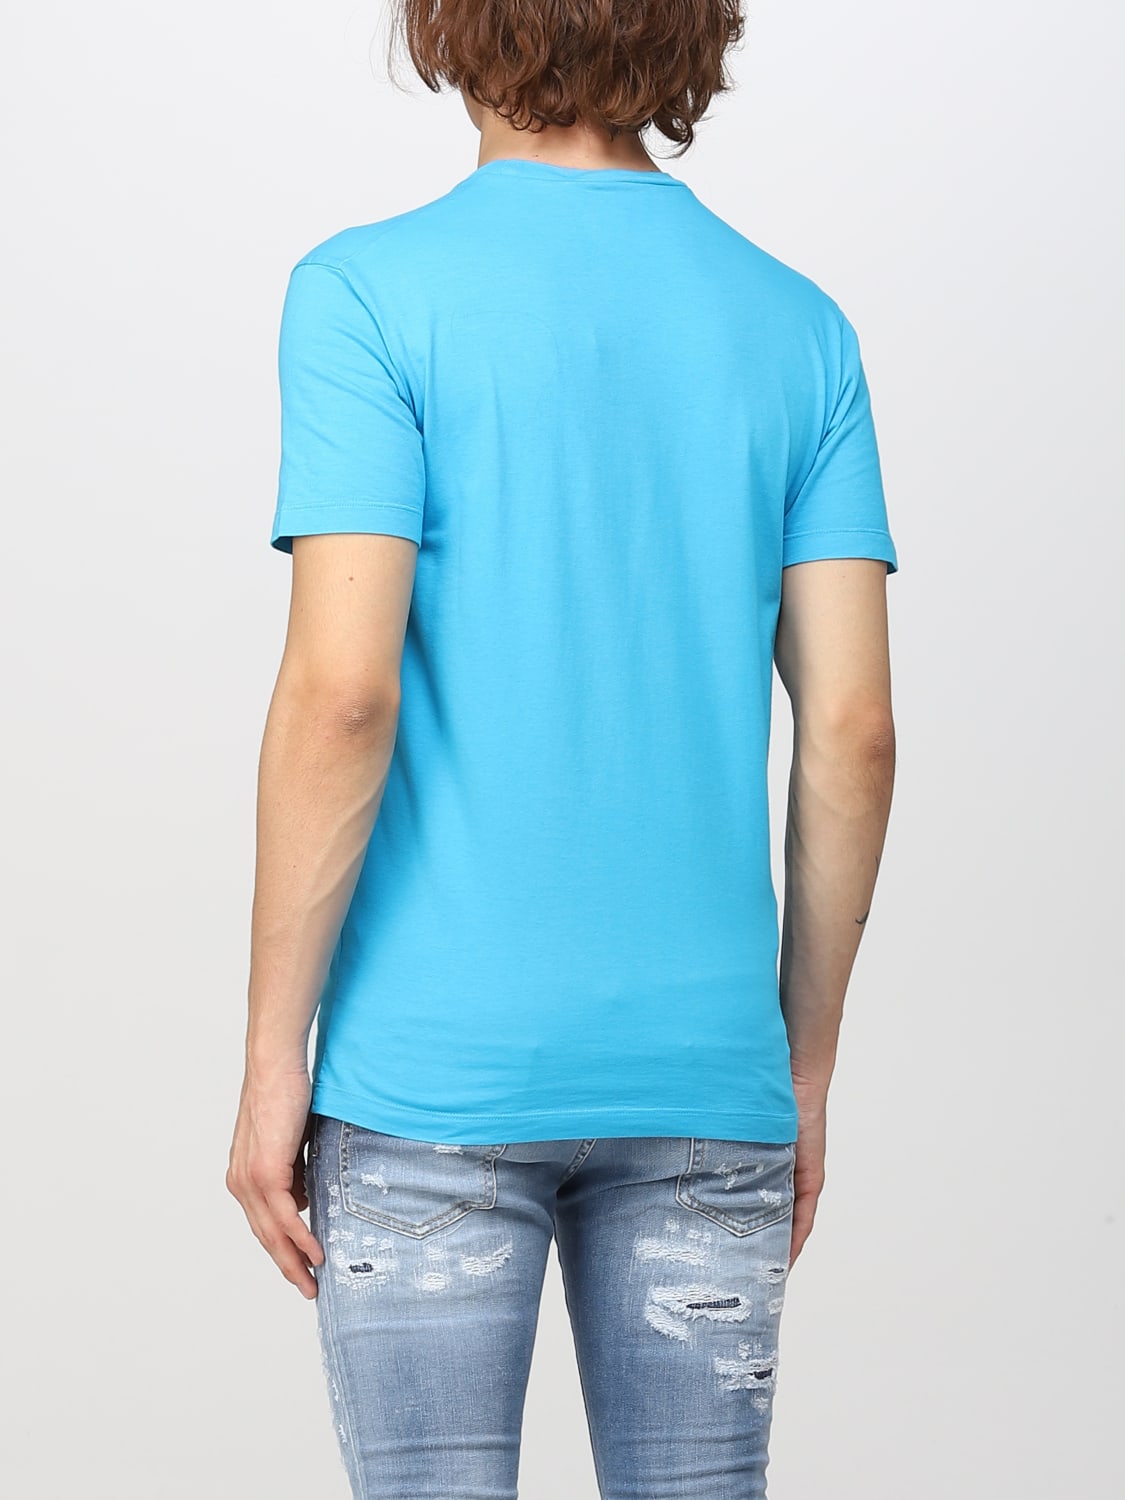 Dsquared2 Outlet: cotton T-shirt - Sky Blue  Dsquared2 t-shirt  S74GD1126S24321 online at